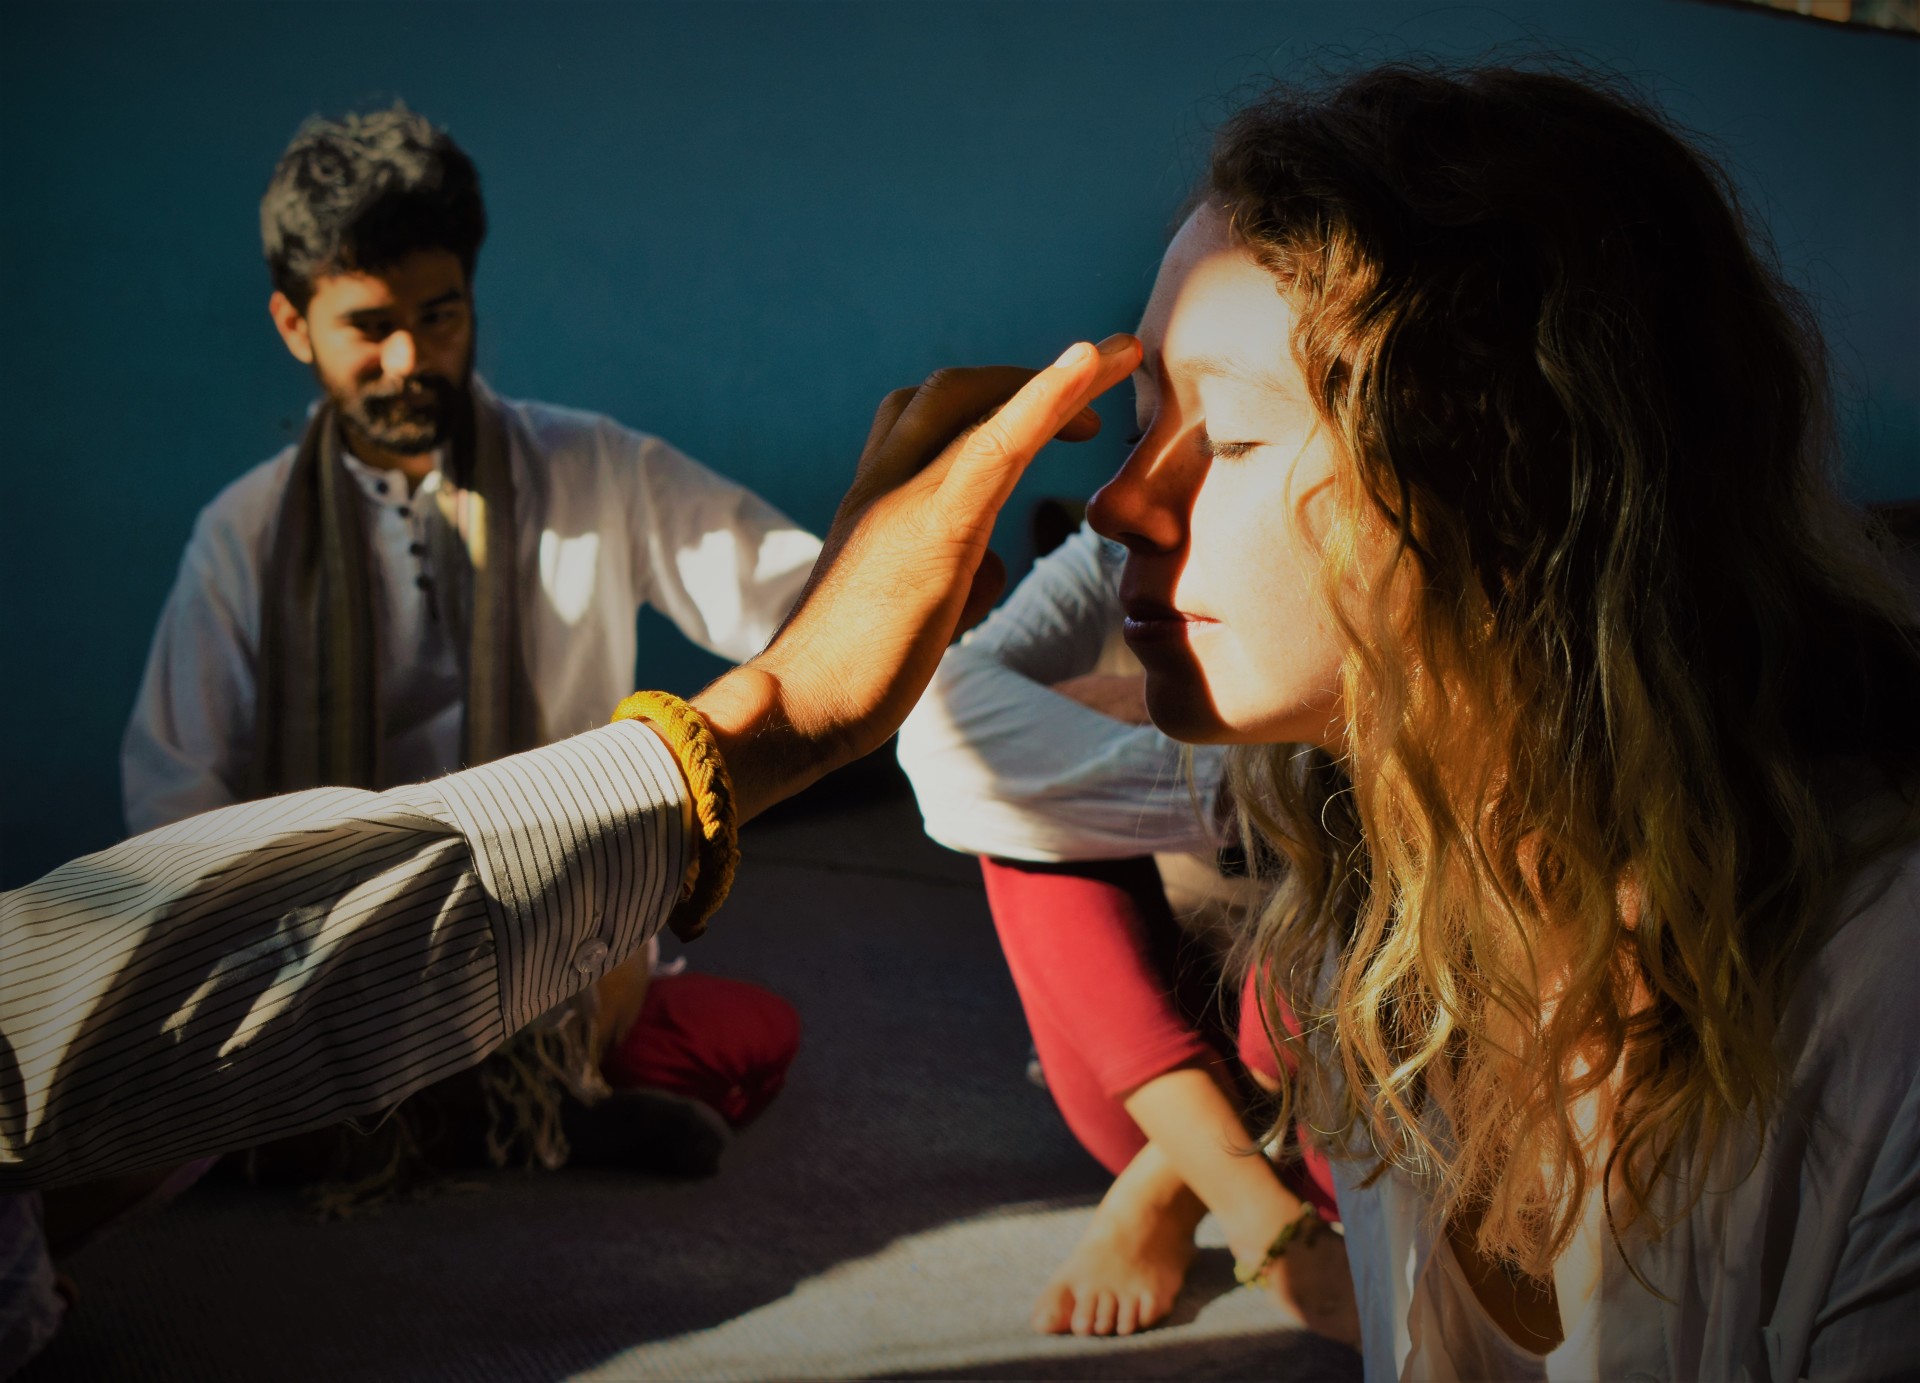 banjaara yoga training centre dharamsala india81525682745.jpg